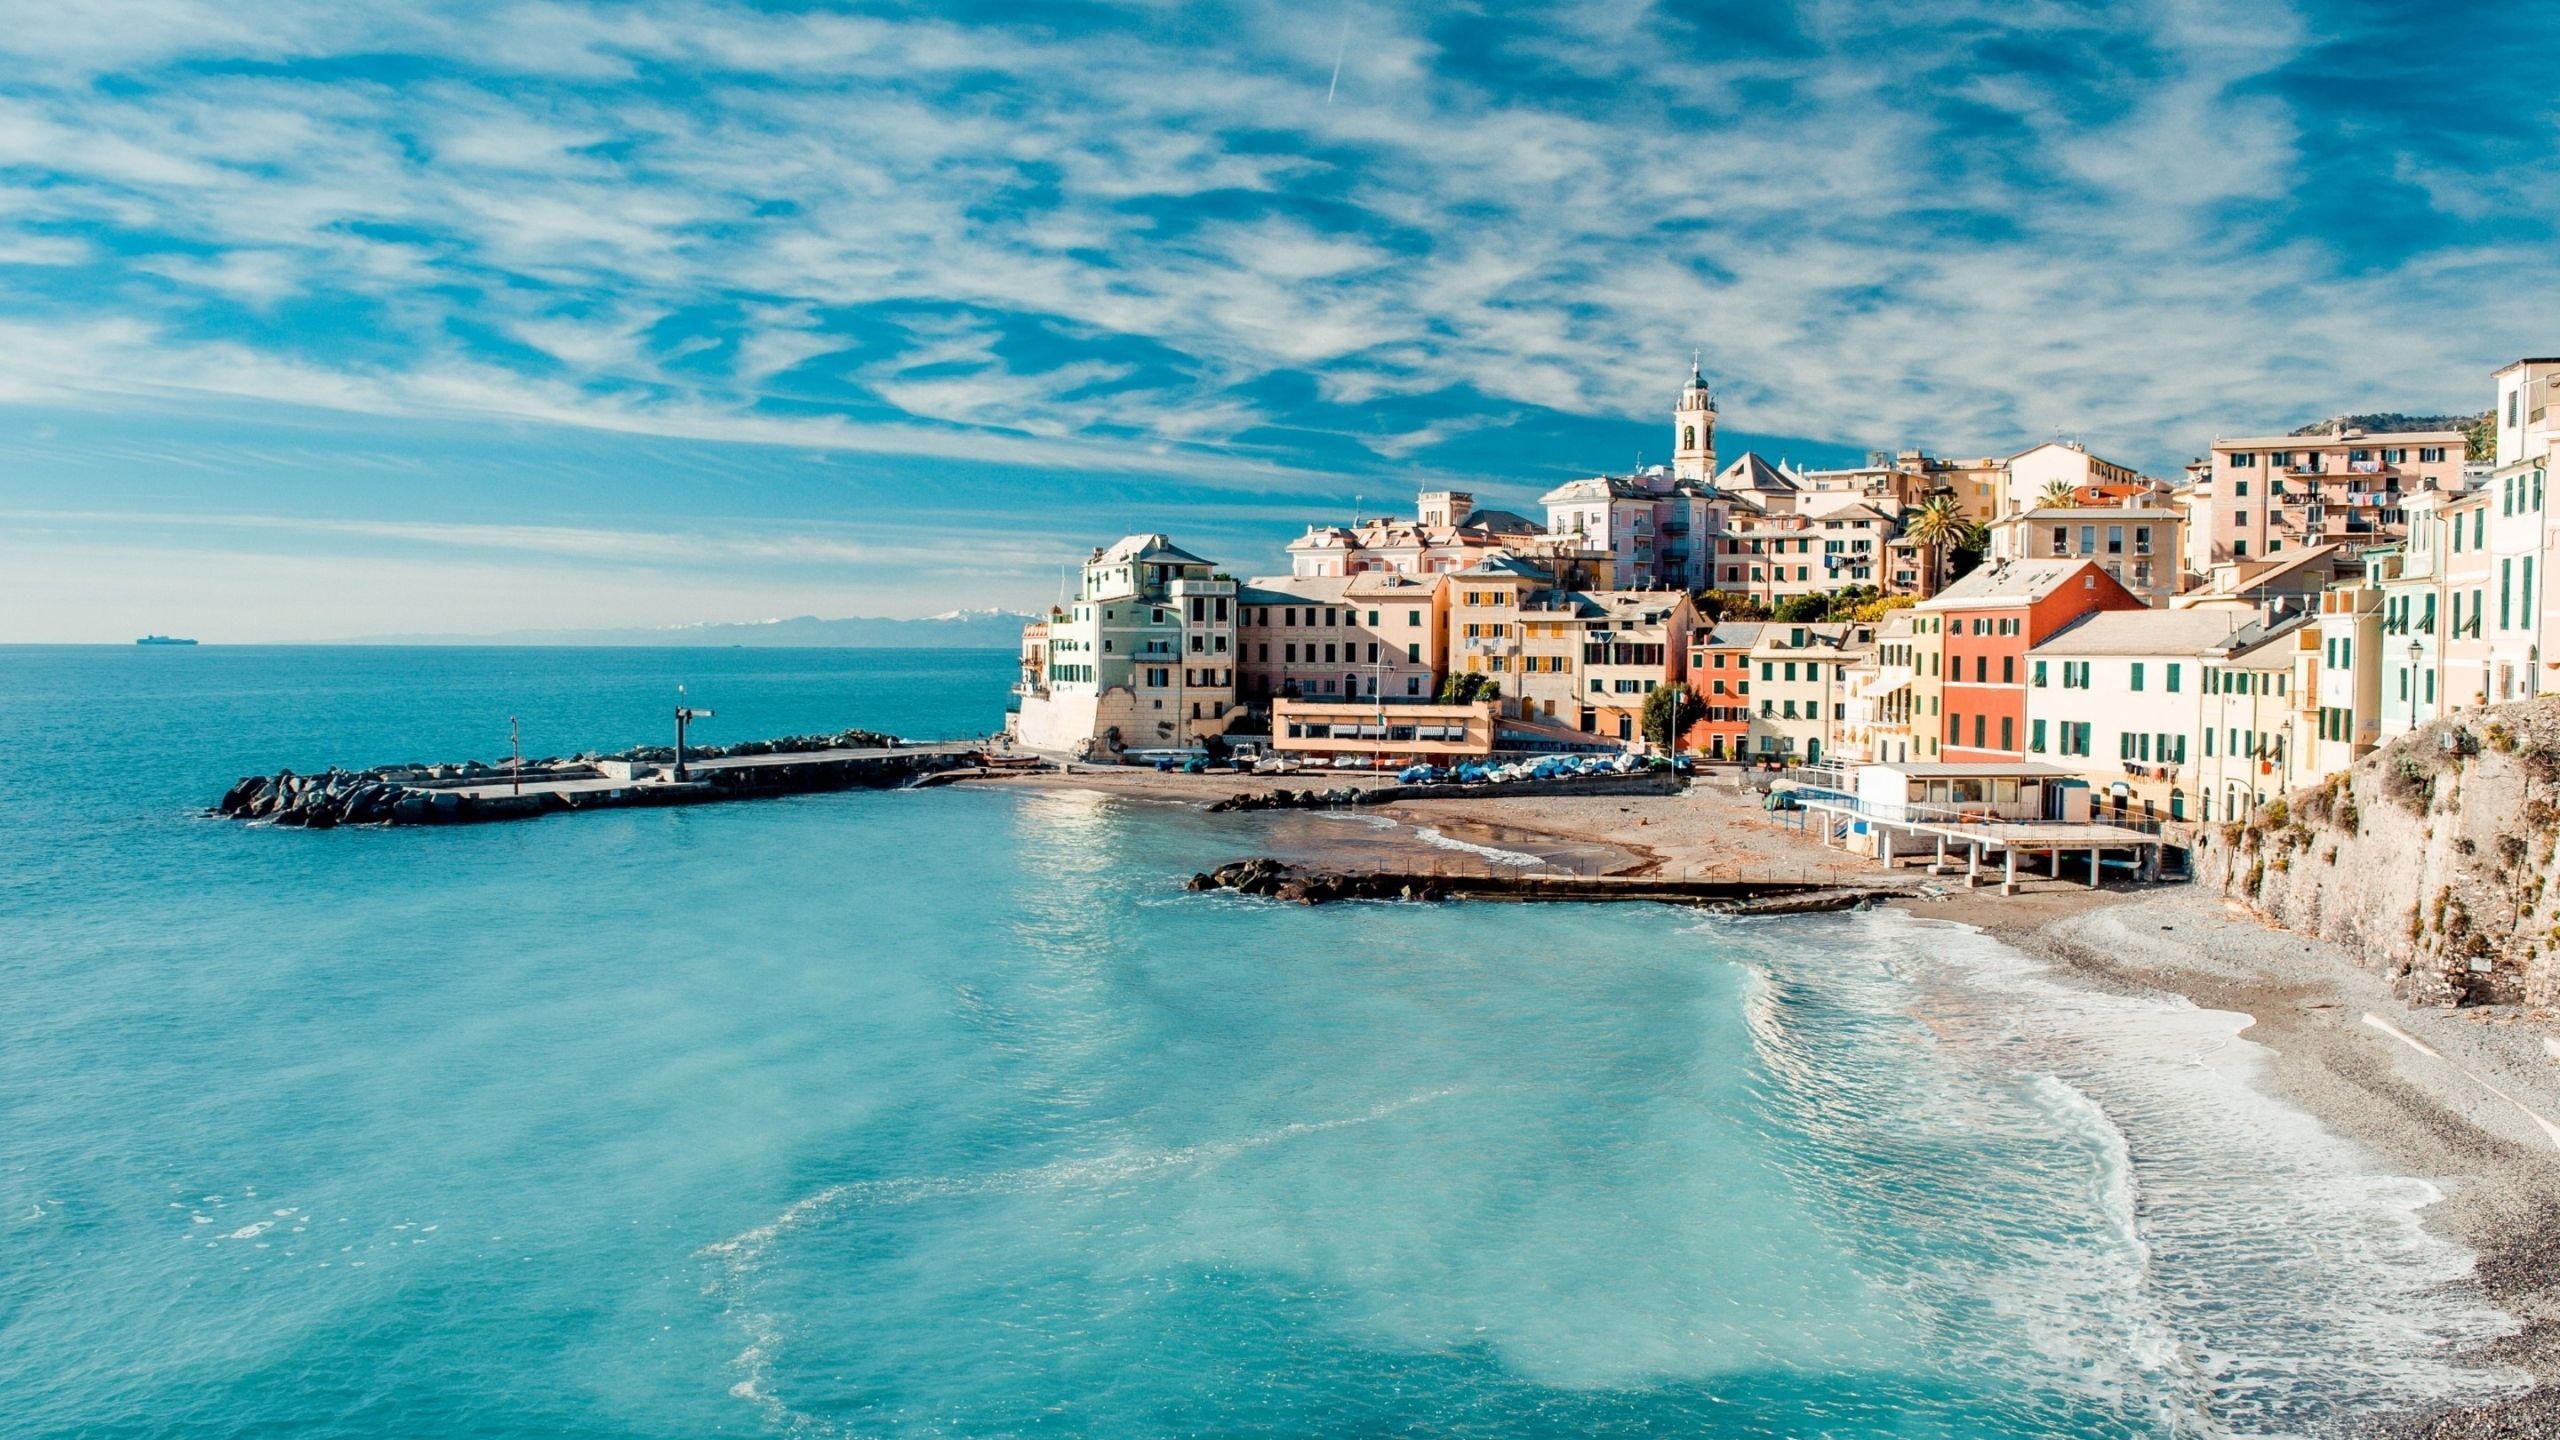 The Cinque Terre View Mac Wallpaper Download | Free Mac Wallpapers ...